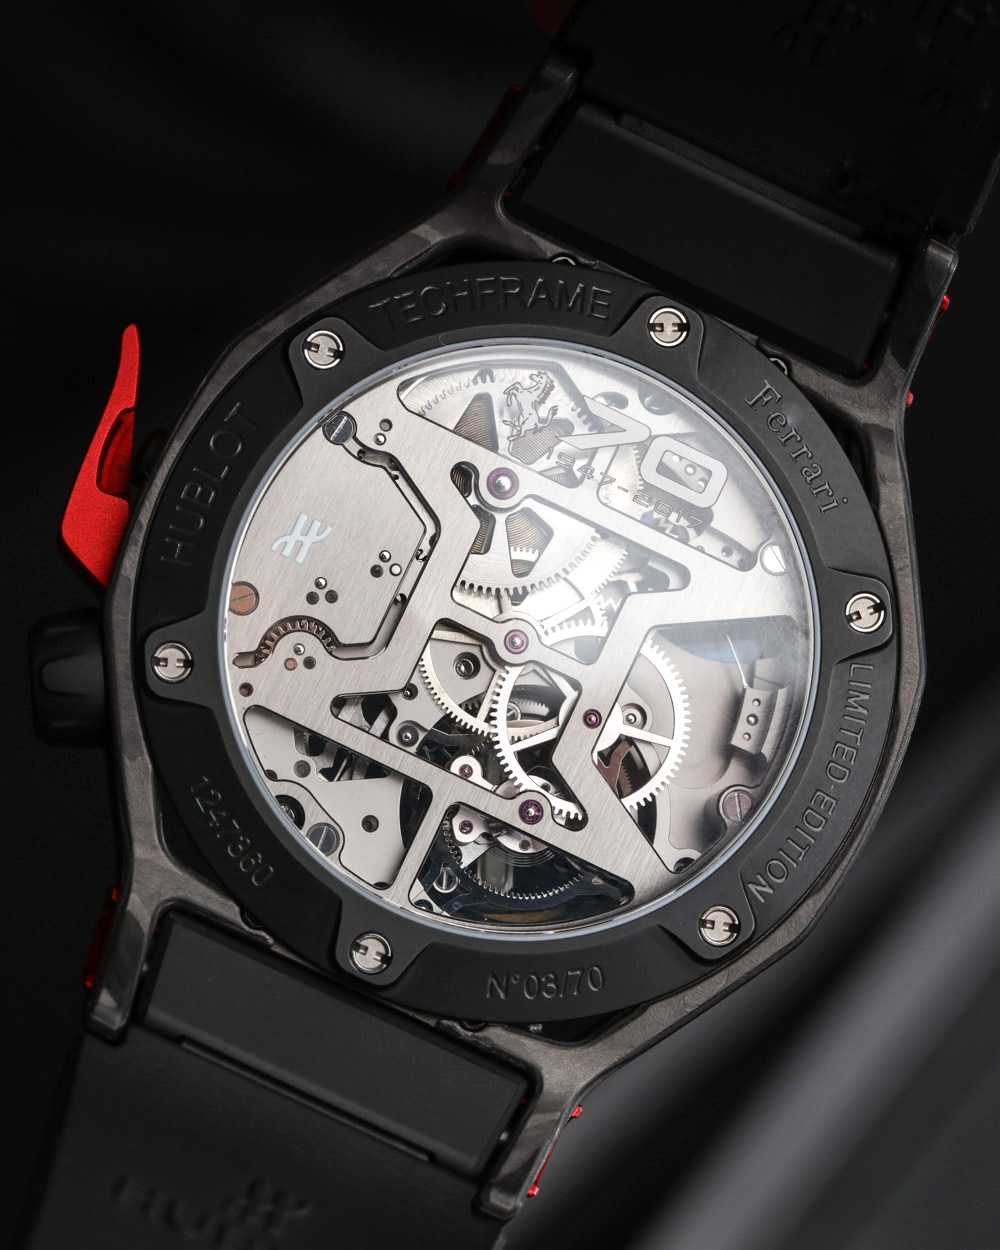 Hublot Techframe Ferrari 70 Years Tourbillon Chronograph 腕表評測 腕上評測 